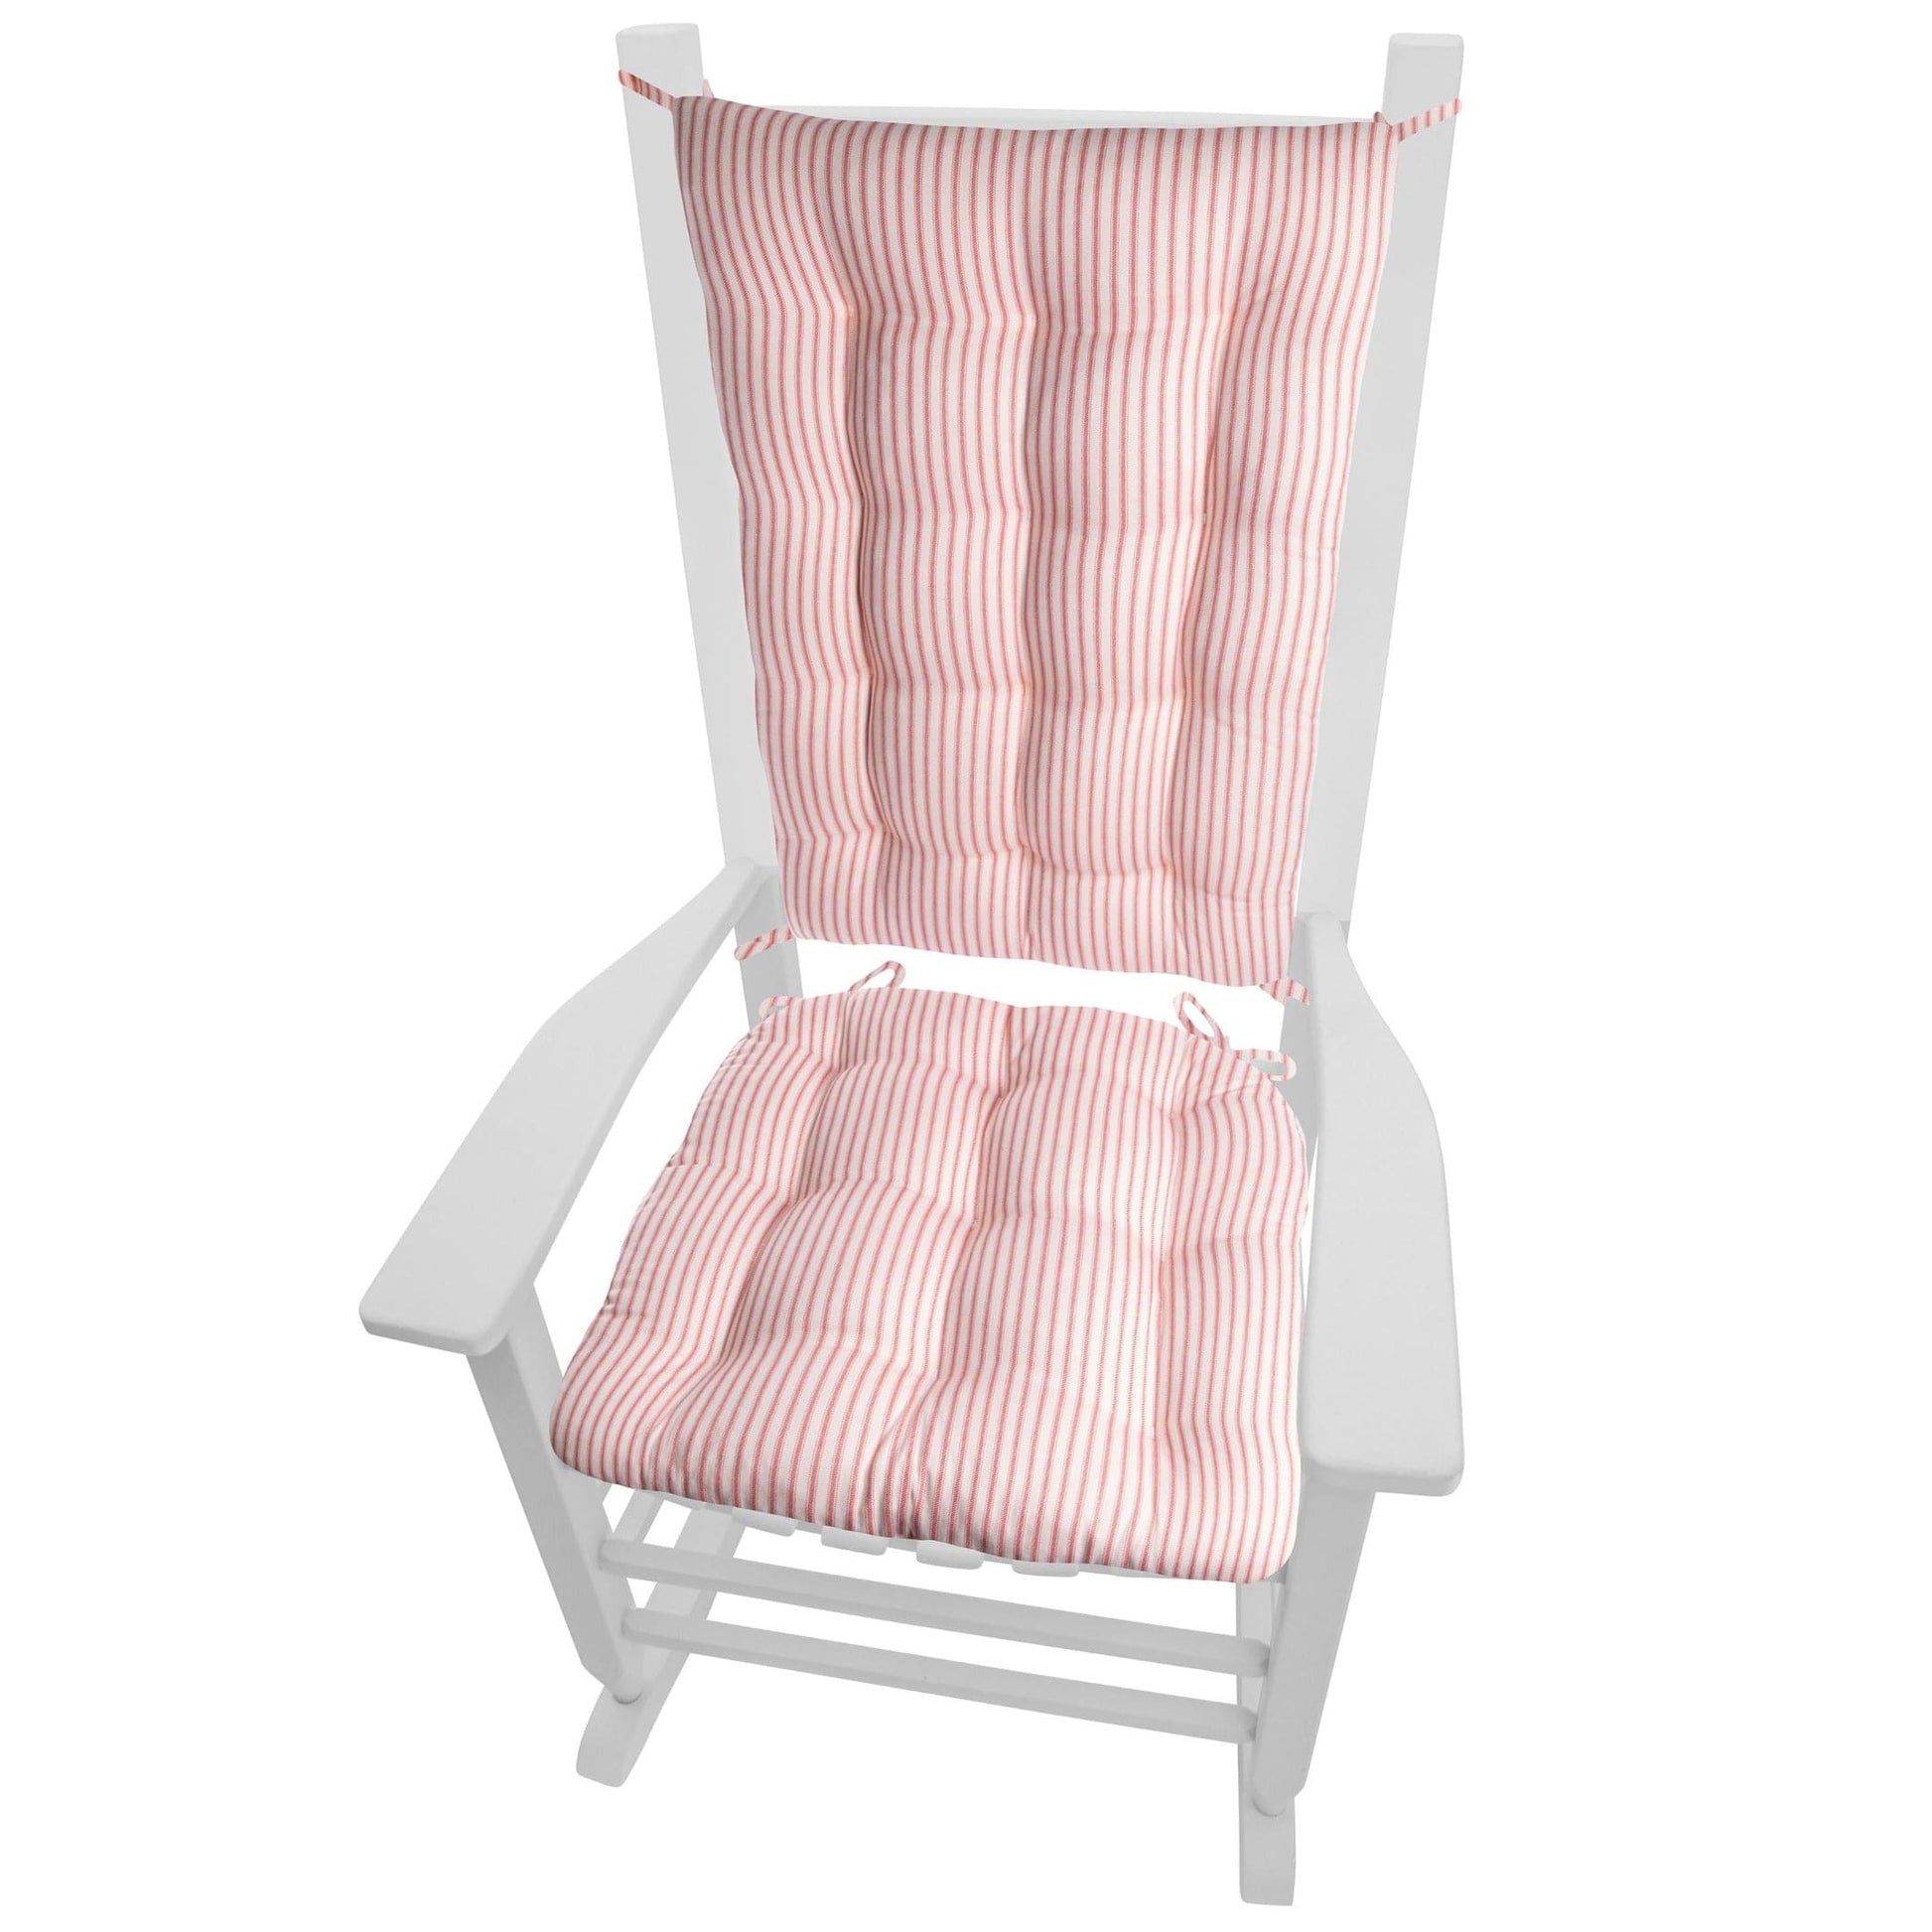 Ticking Stripe Red Rocking Chair Cushions | Barnett Home Decor | Red & White